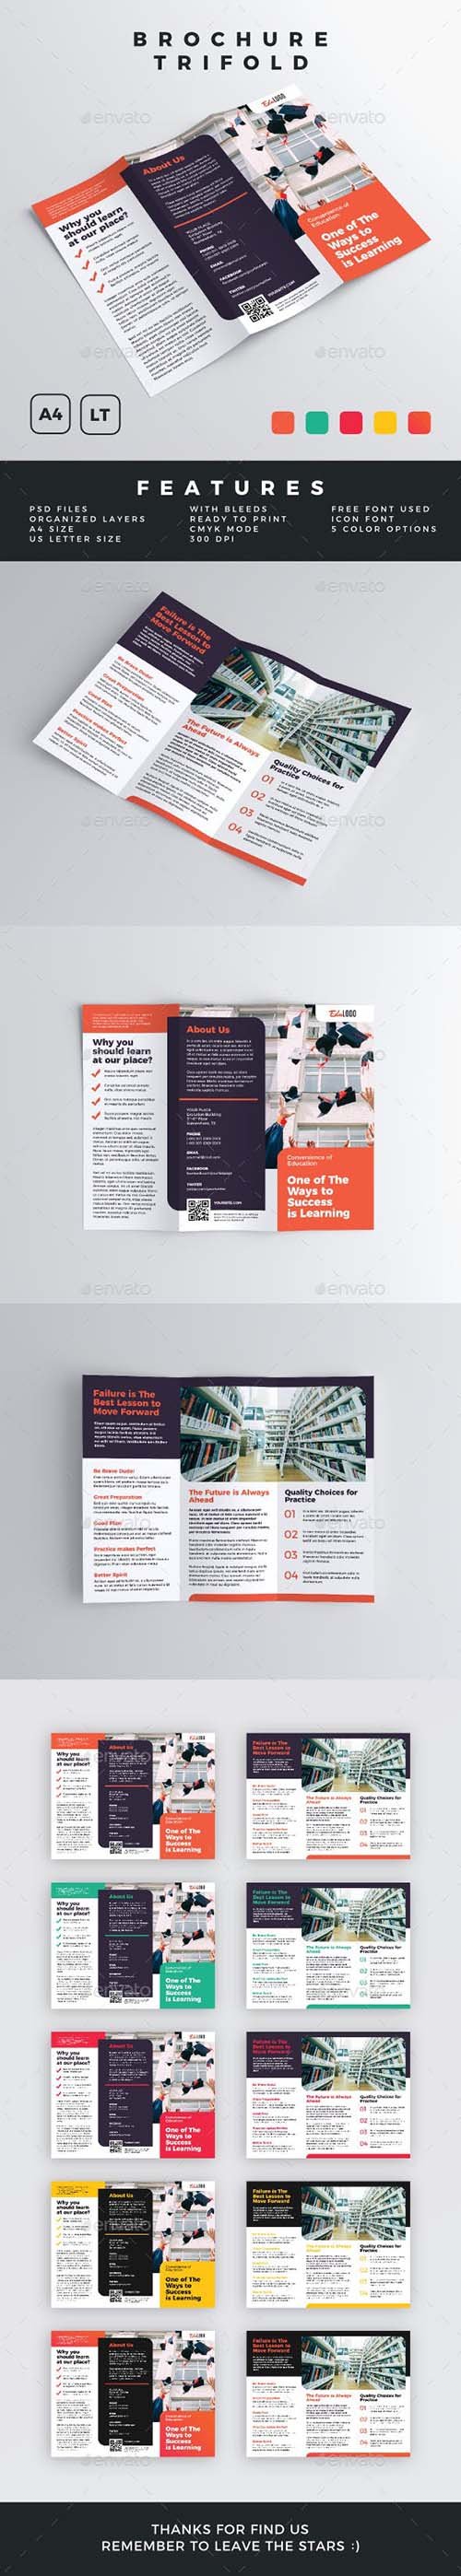 GraphicRiver - Brochure - Trifold - 22879400